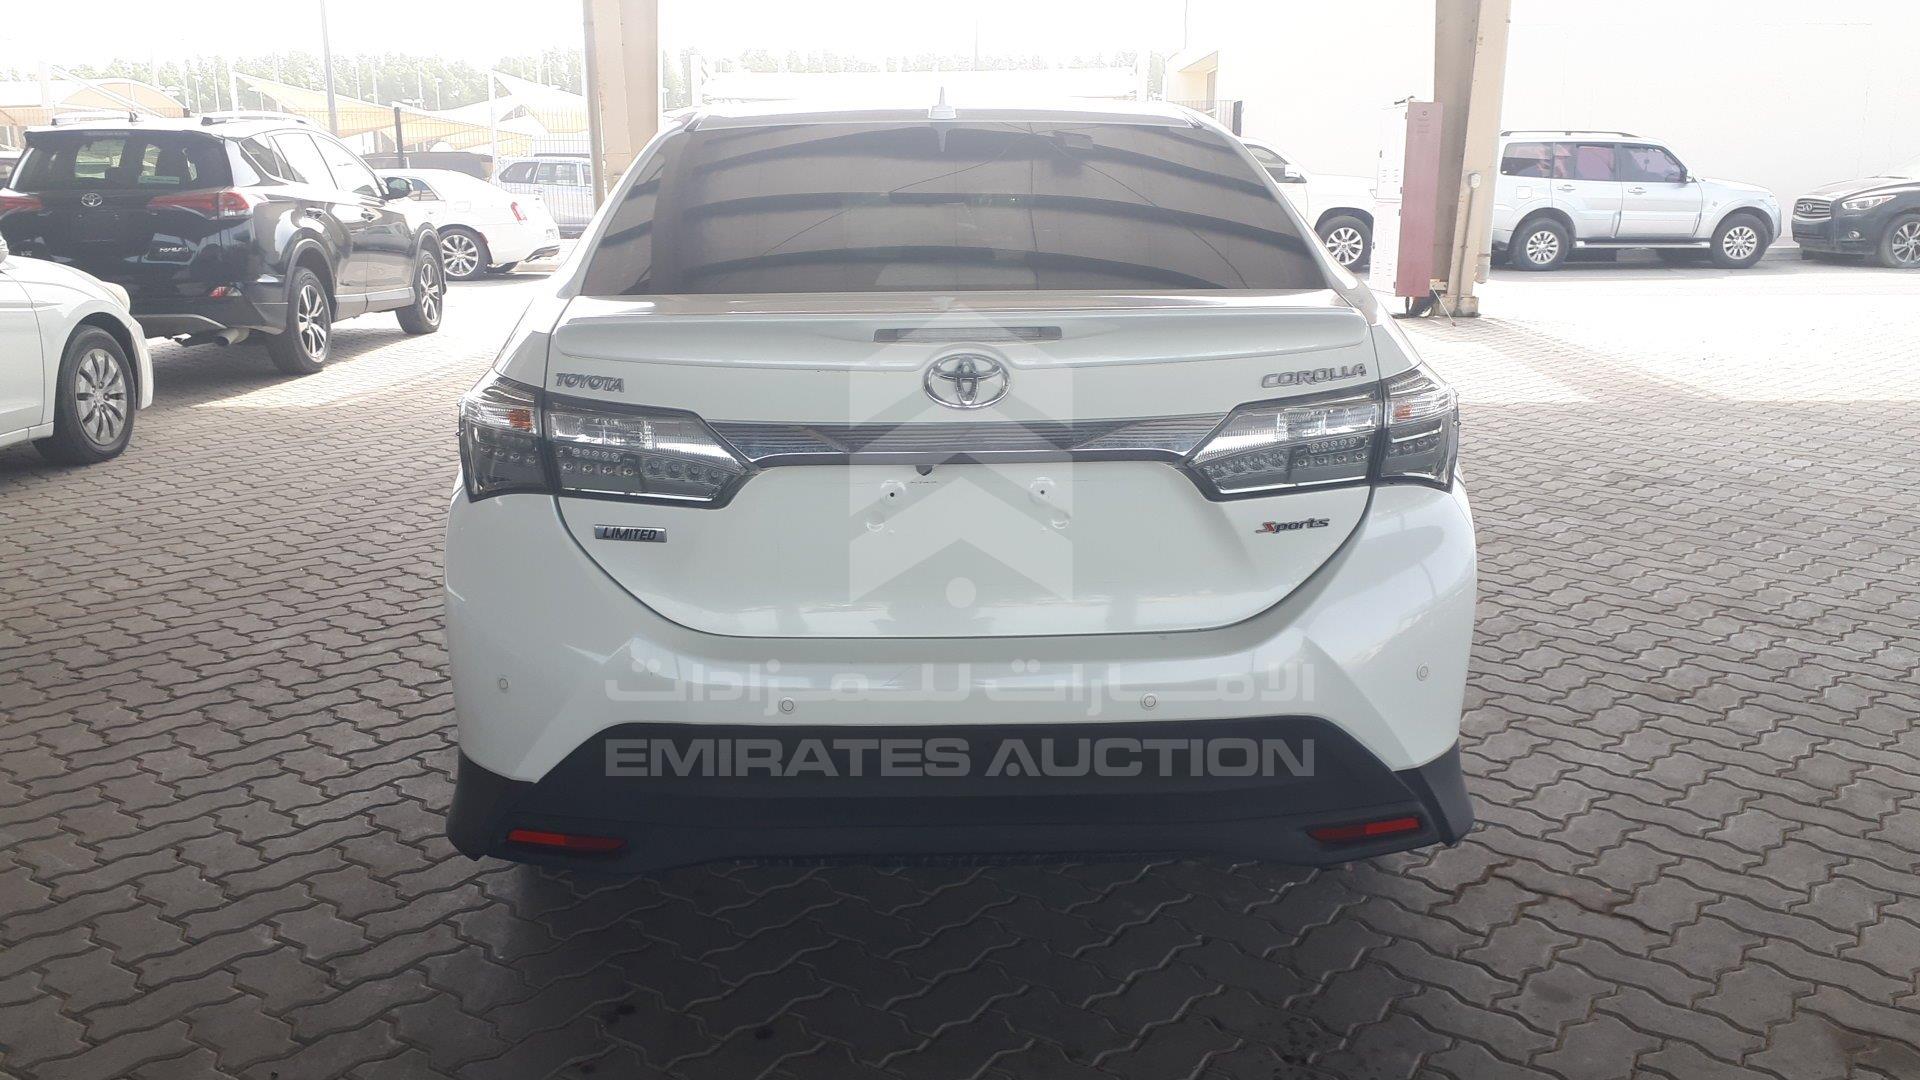 price 6000 alfahd corolla cars auction